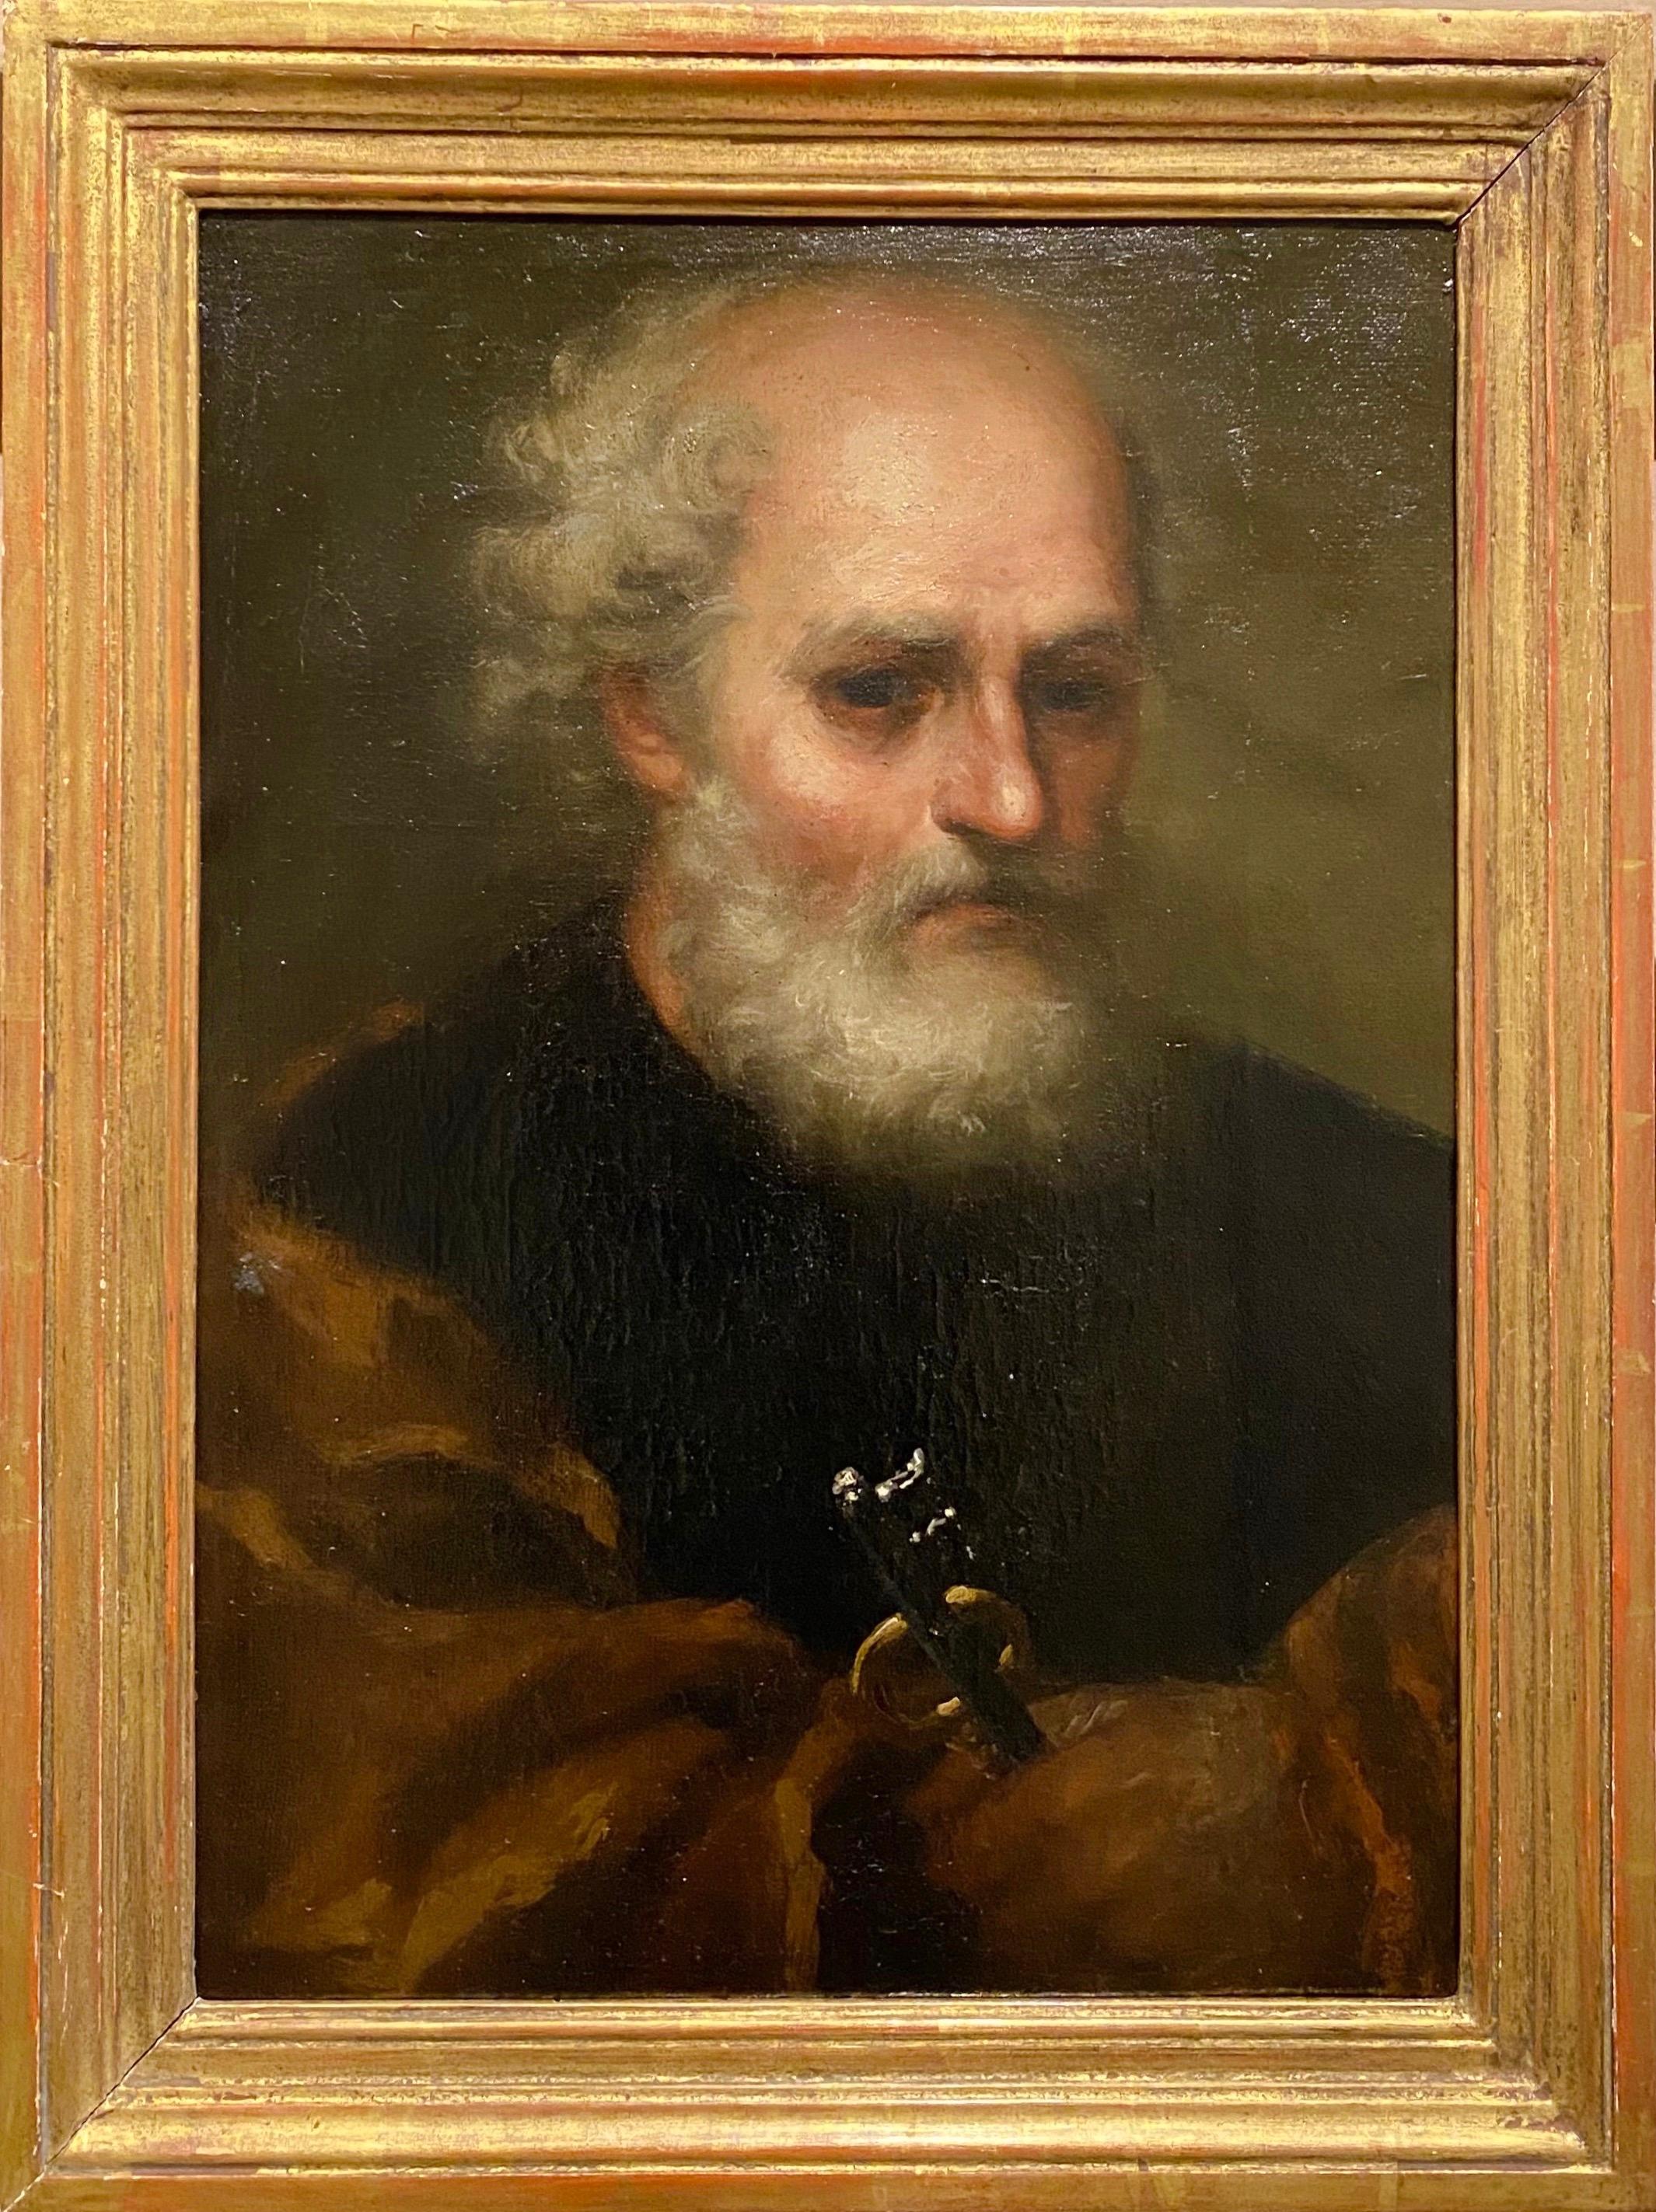 17th century Italian Old Master painting St. Peter the keys to heaven - Da Vinci